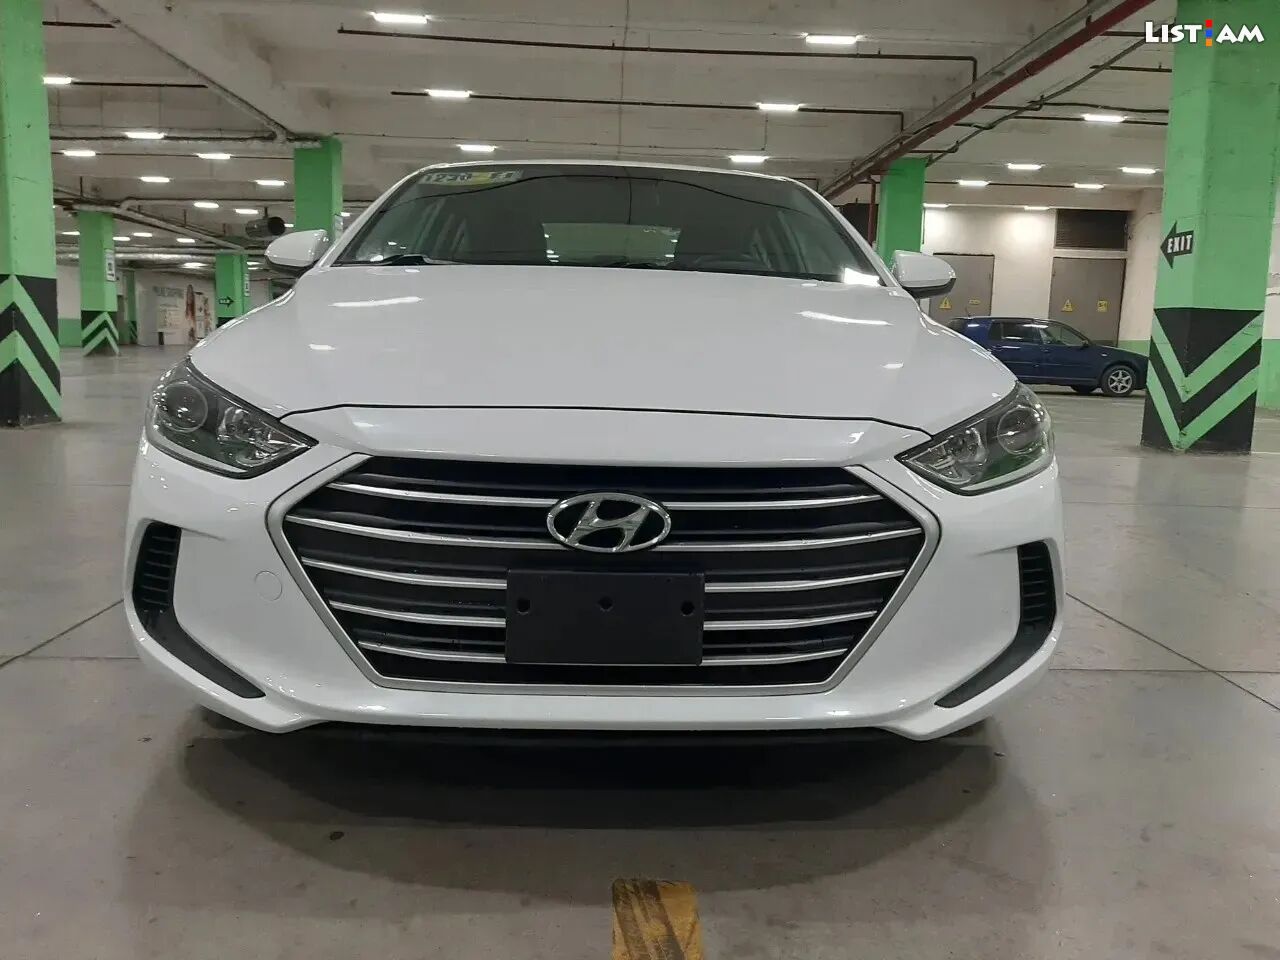 Hyundai Elantra, 2.0